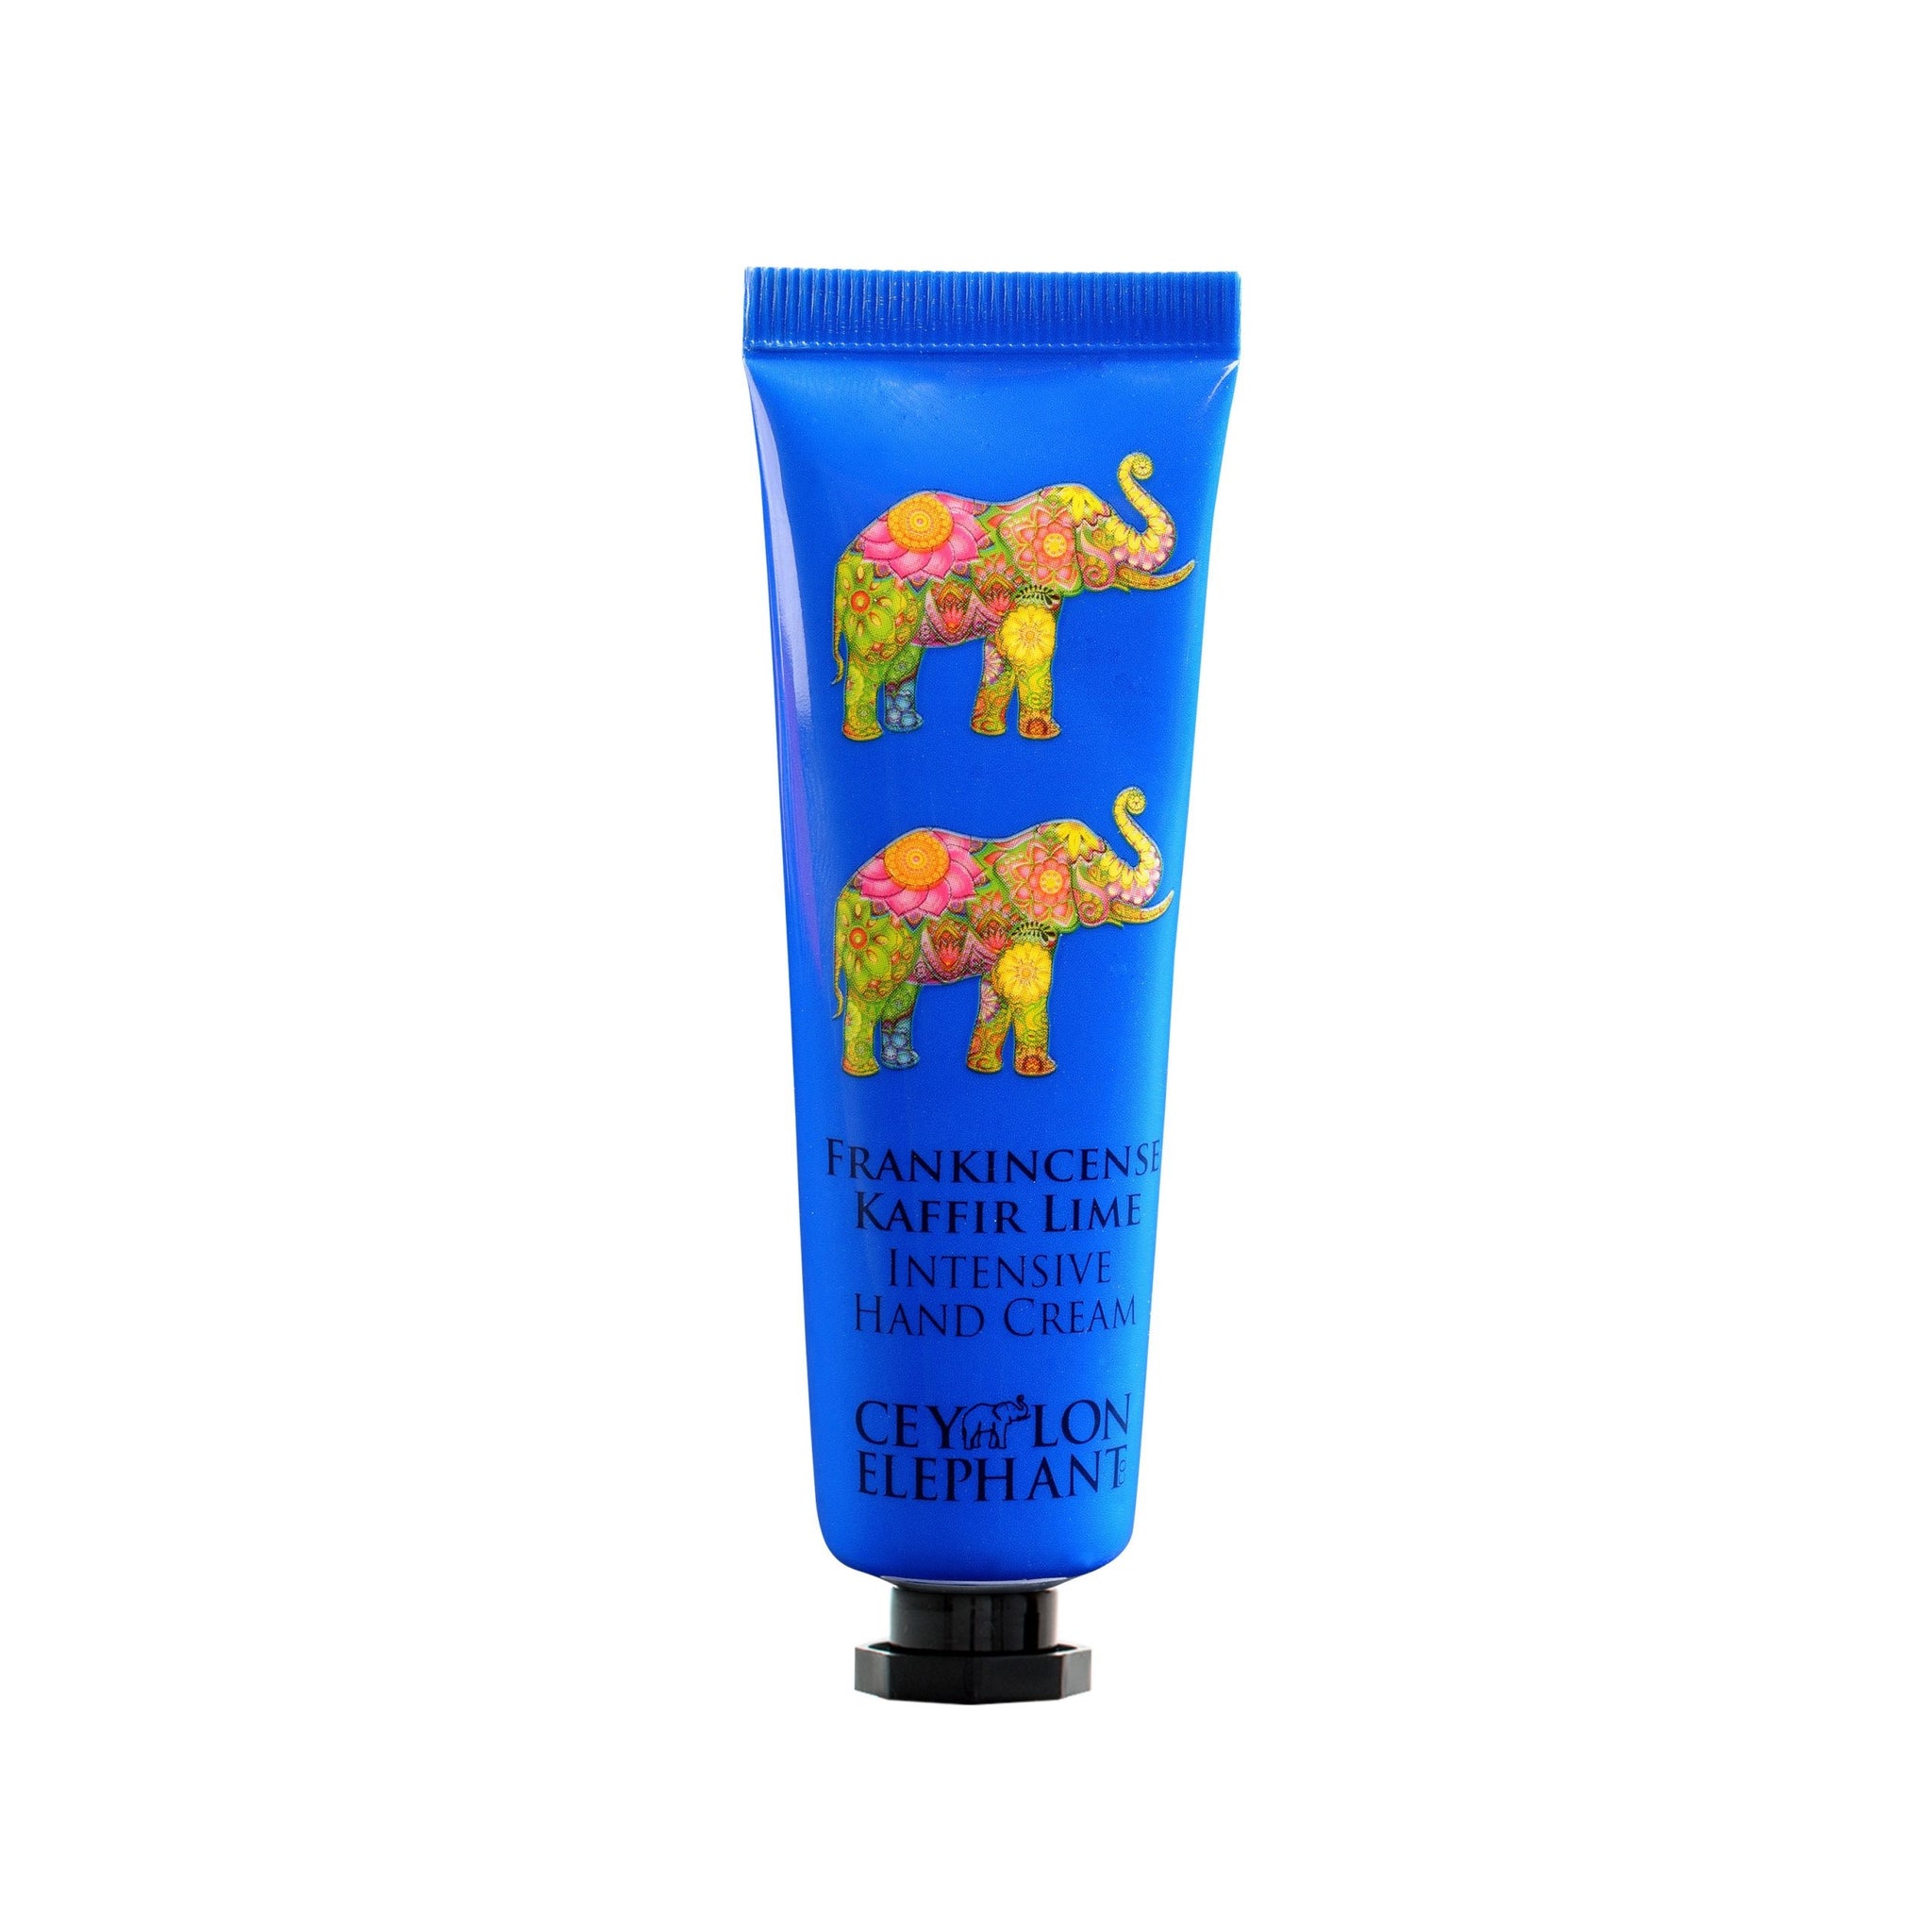 Spa Ceylon Elephant Frankincense Kaffir Lime Intensive Hand Cream 30g